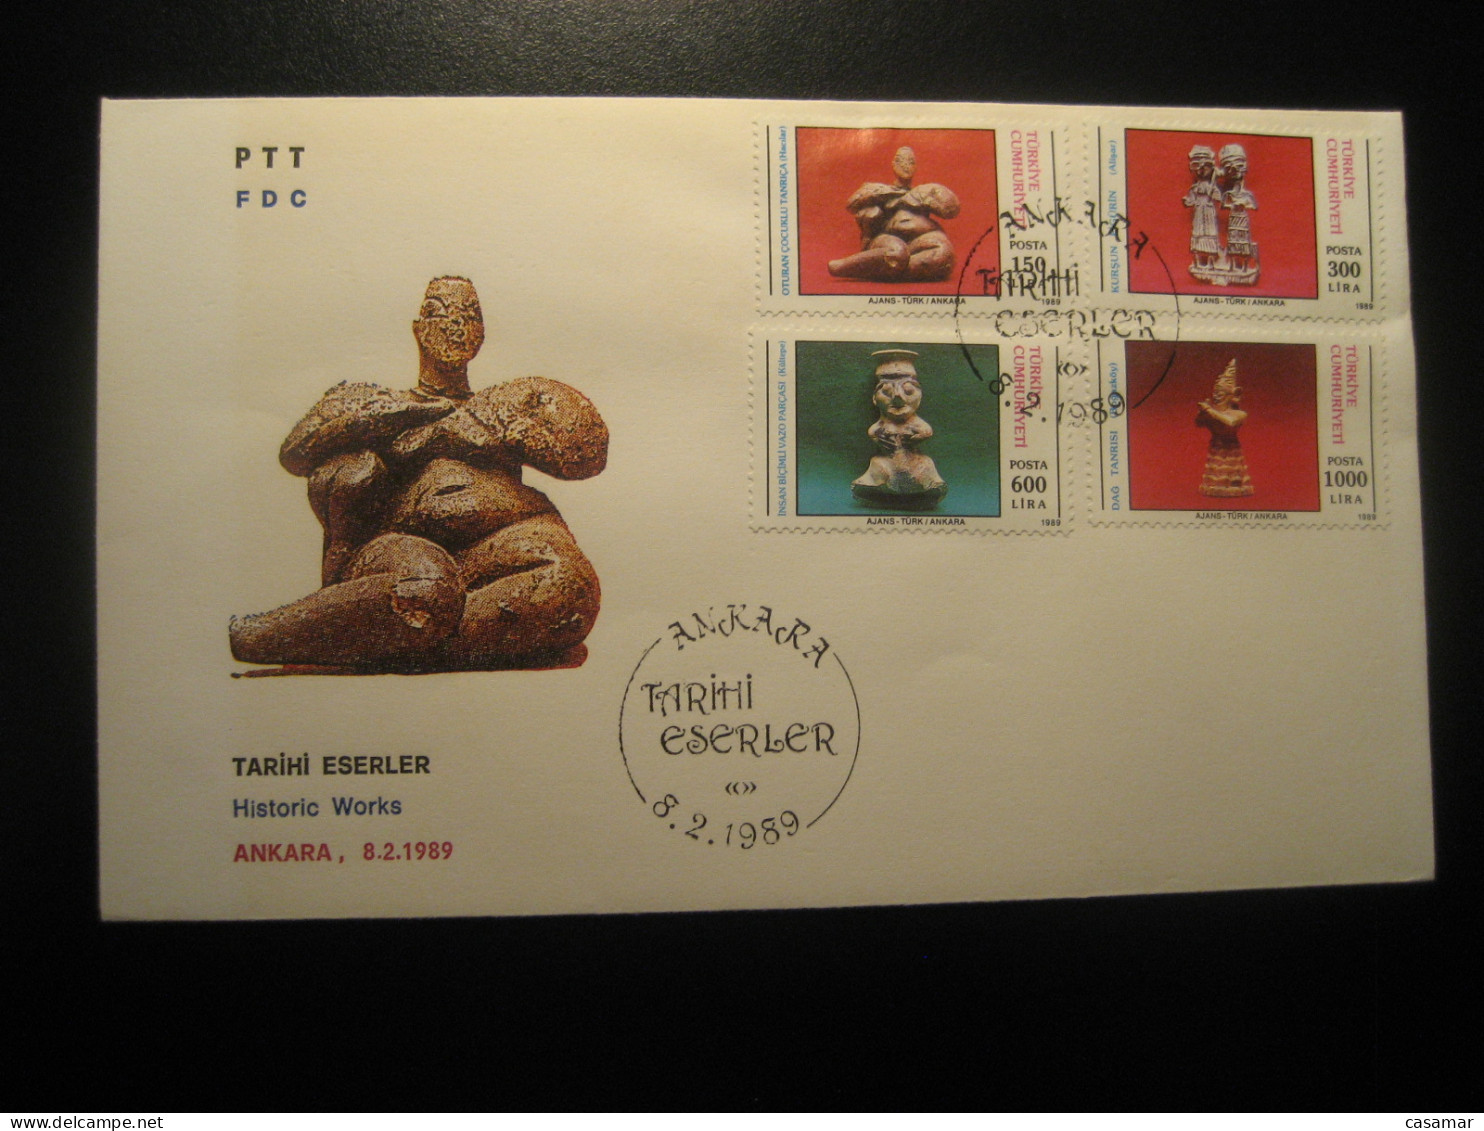 ANKARA 1989 Historic Works FDC Cancel Cover TURKEY - Briefe U. Dokumente